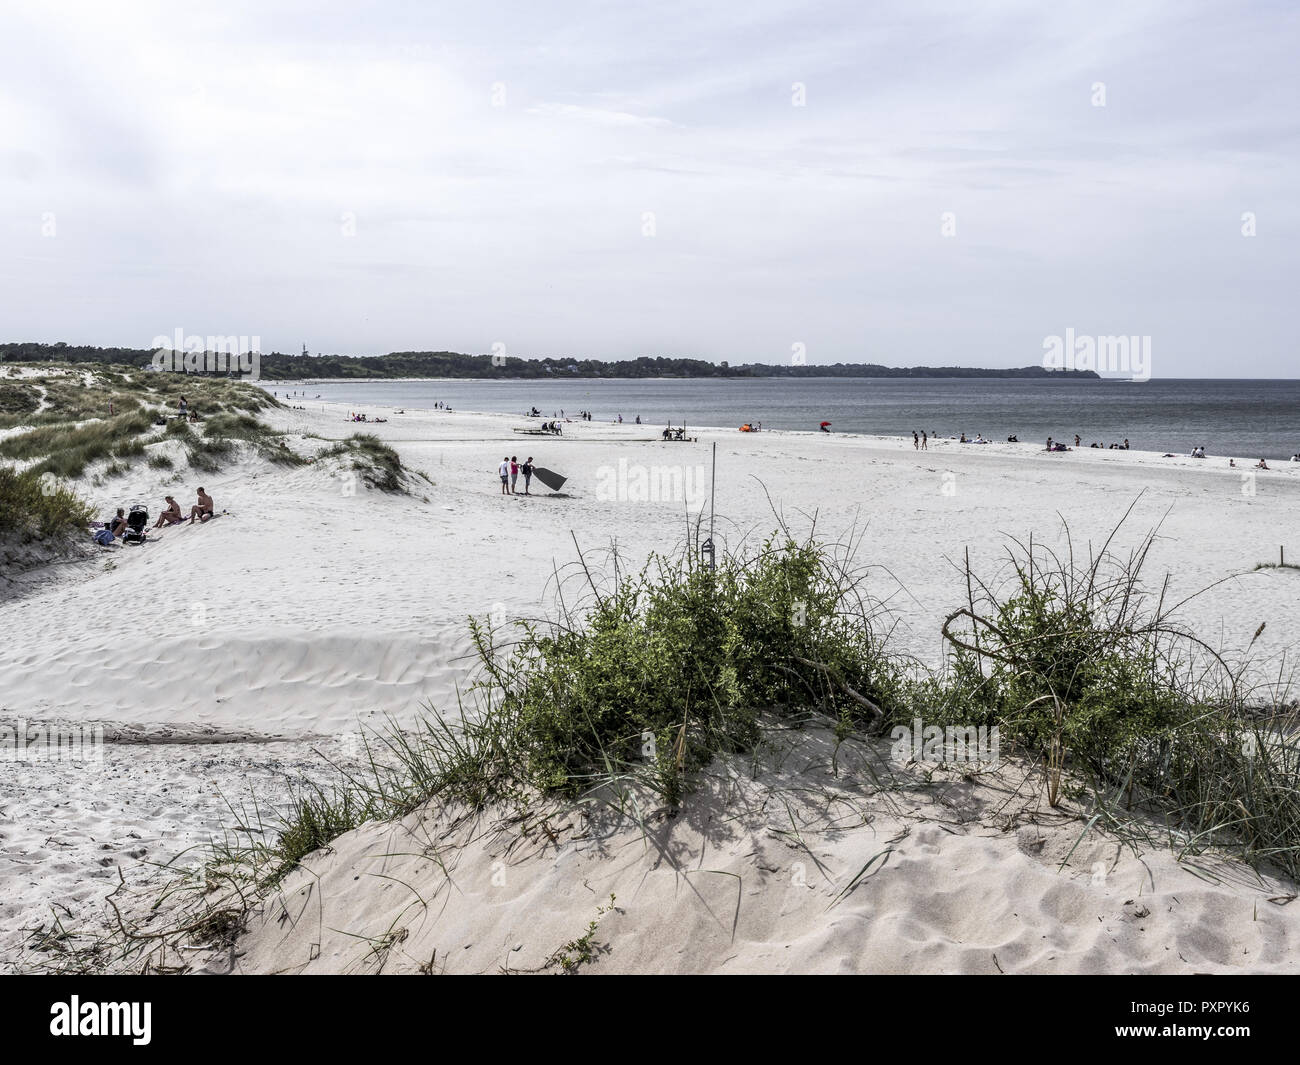 Le dune di sabbia e spiaggia di Hornbaek, Danimarca e Scandinavia Foto Stock